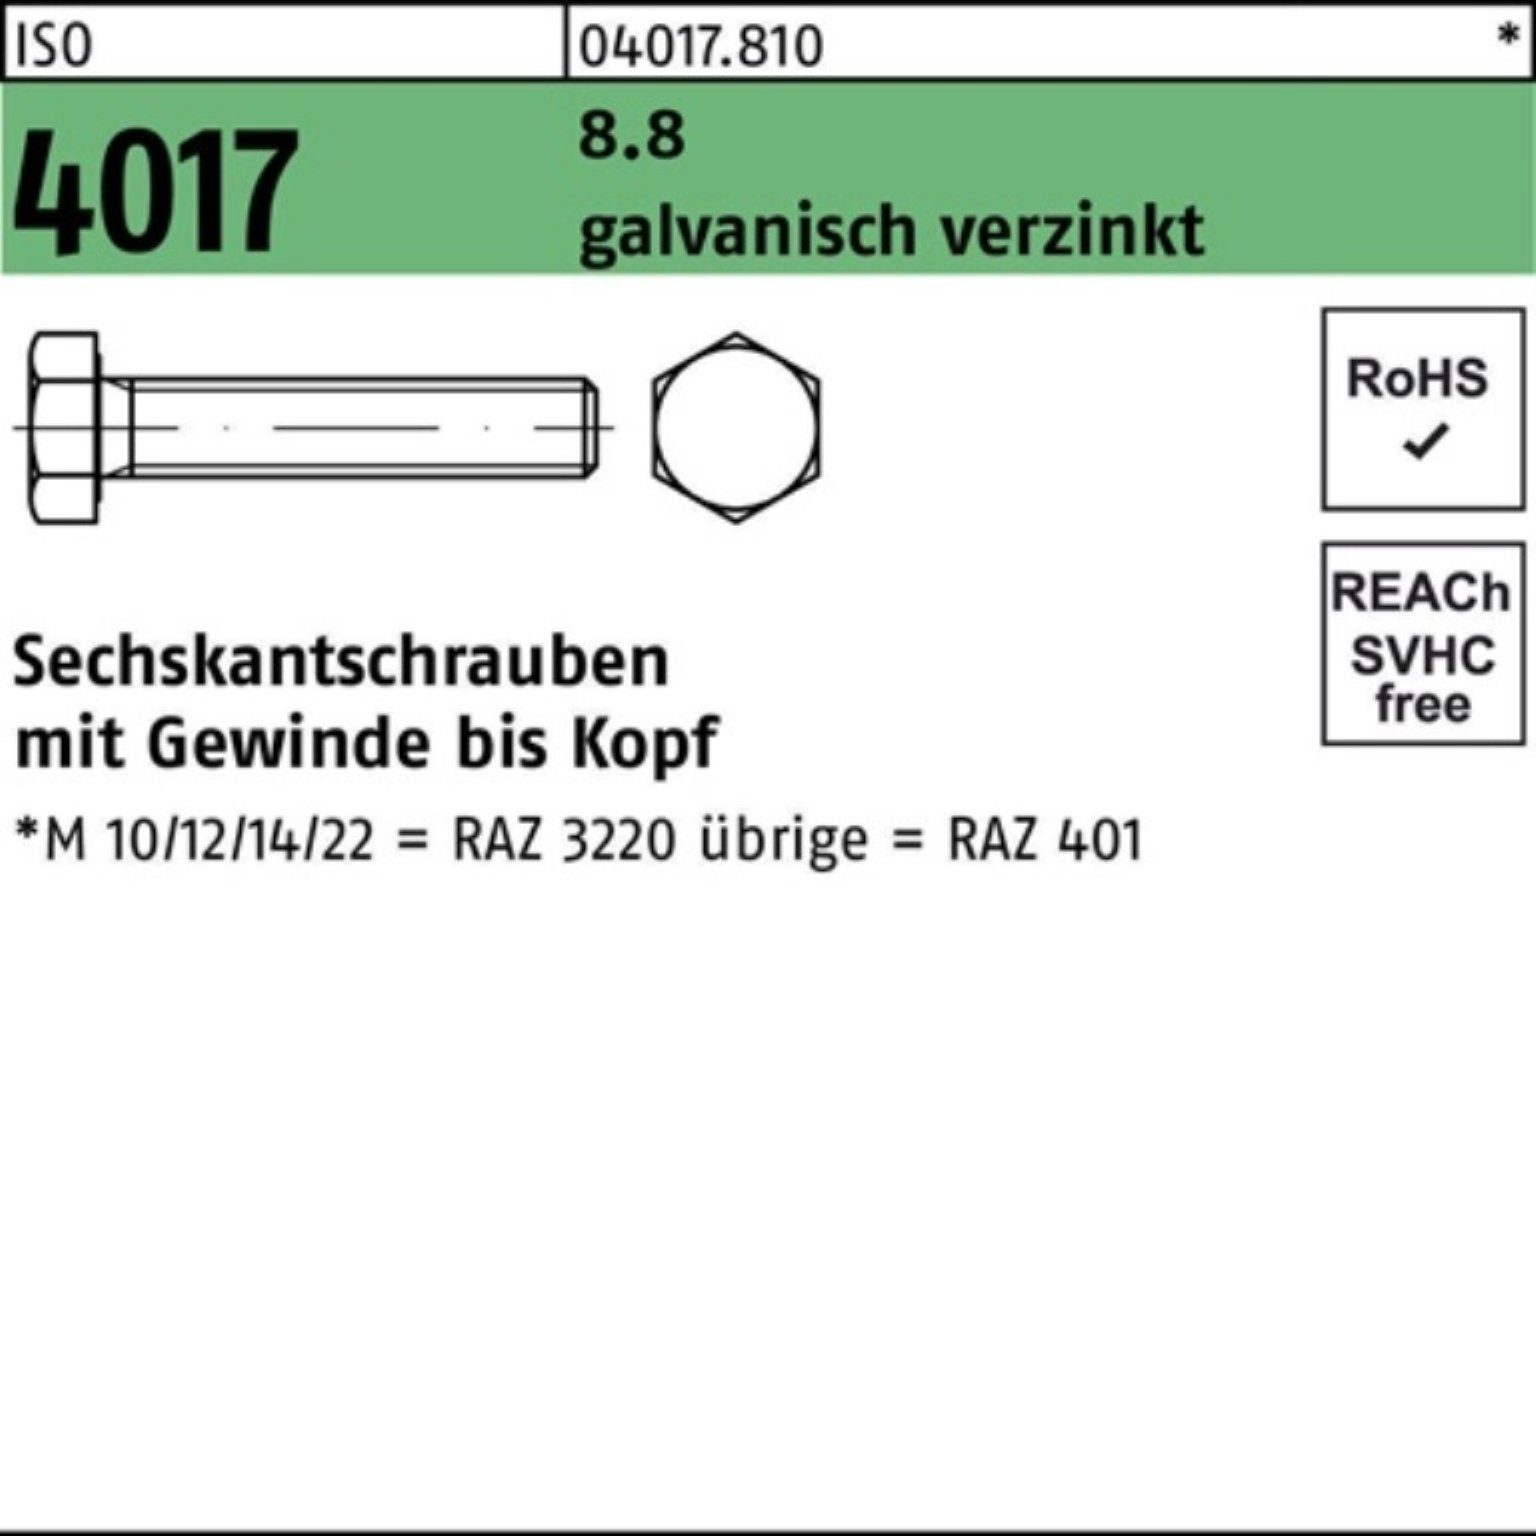 Bufab Sechskantschraube 100er Pack 25 VG St Sechskantschraube 4017 galv.verz. M20x 8.8 ISO 45